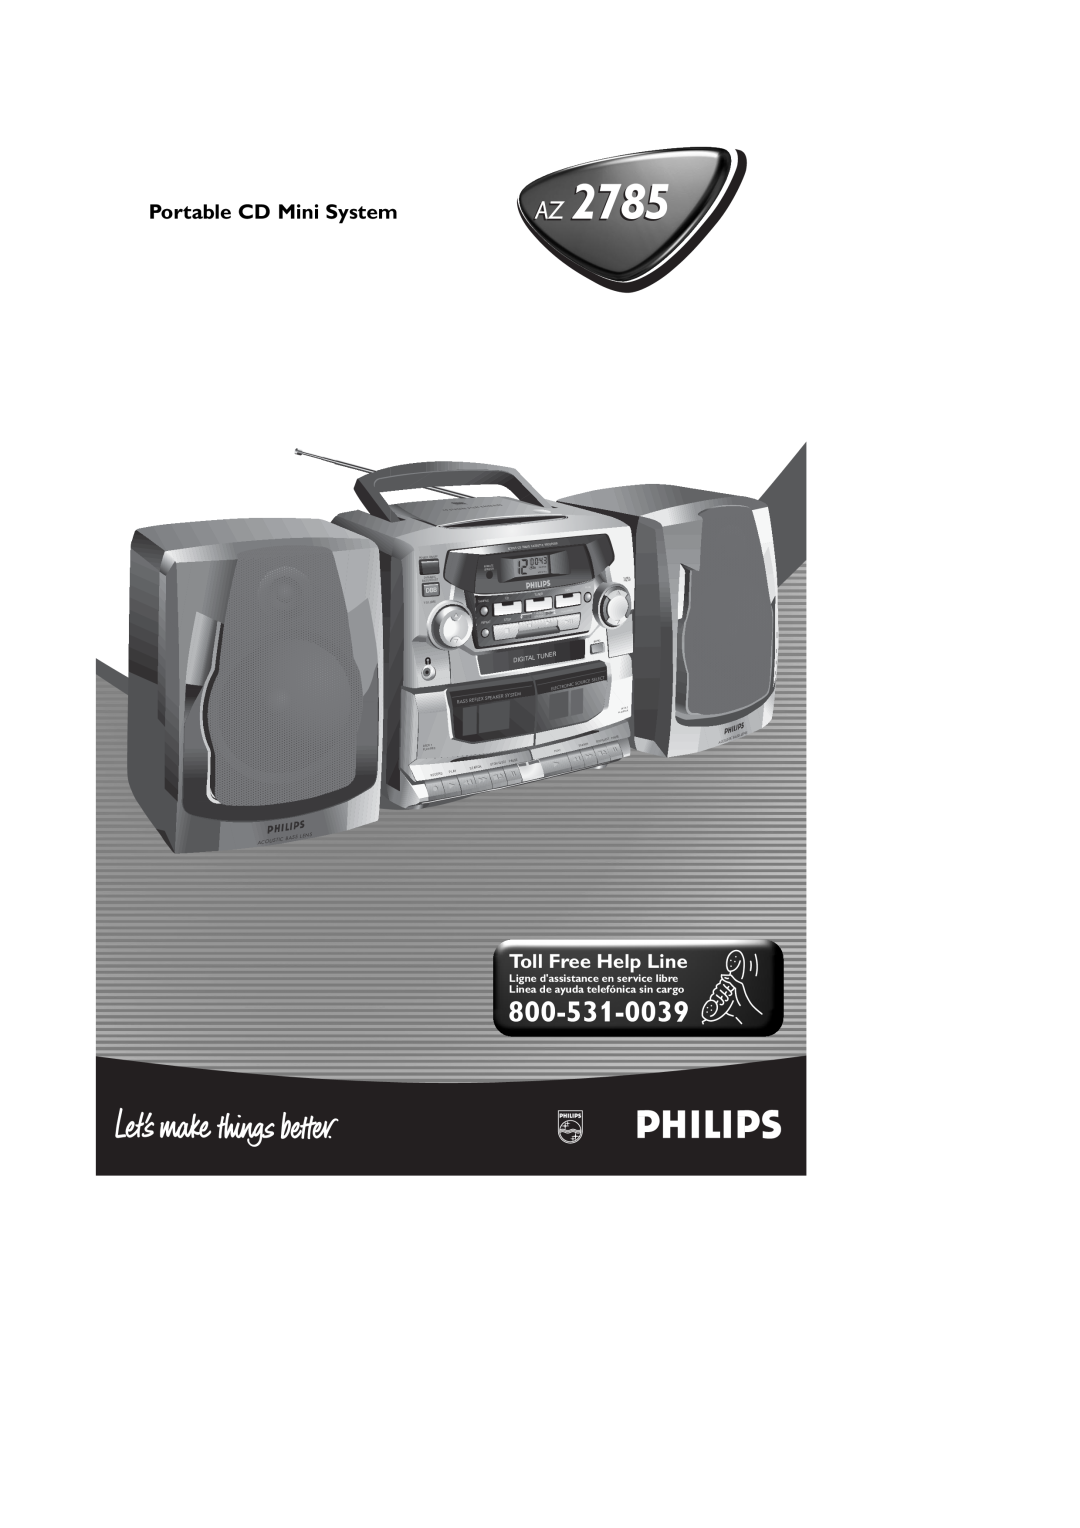 Philips AZ 2785 manual Portable CD Mini System, Toll Free Help Line, Ligne dassistance en service libre, Digital, Tuner 